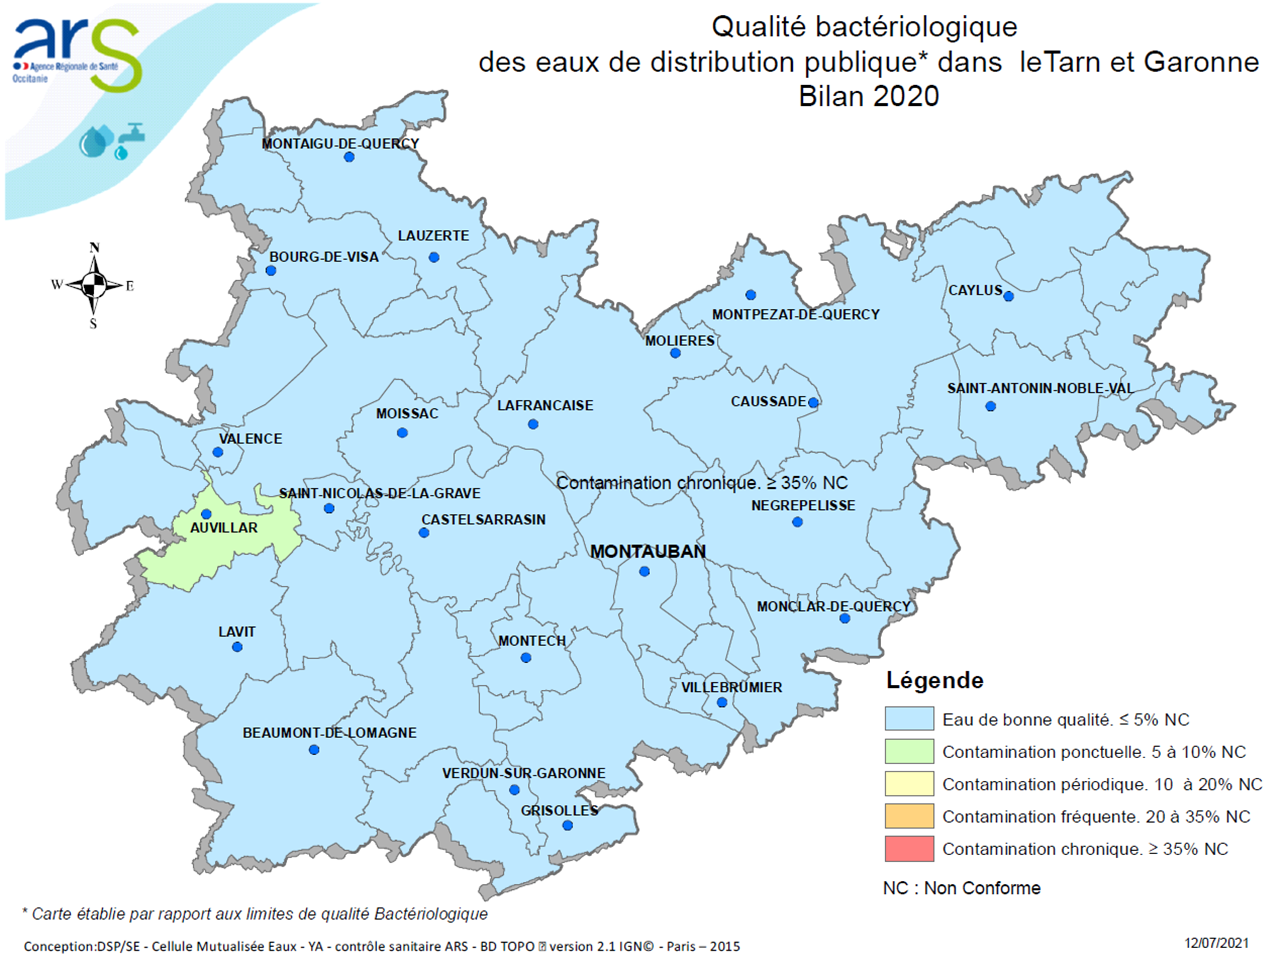 Bactériologie Tarn-et-Garonne (Bilan eau 2020)